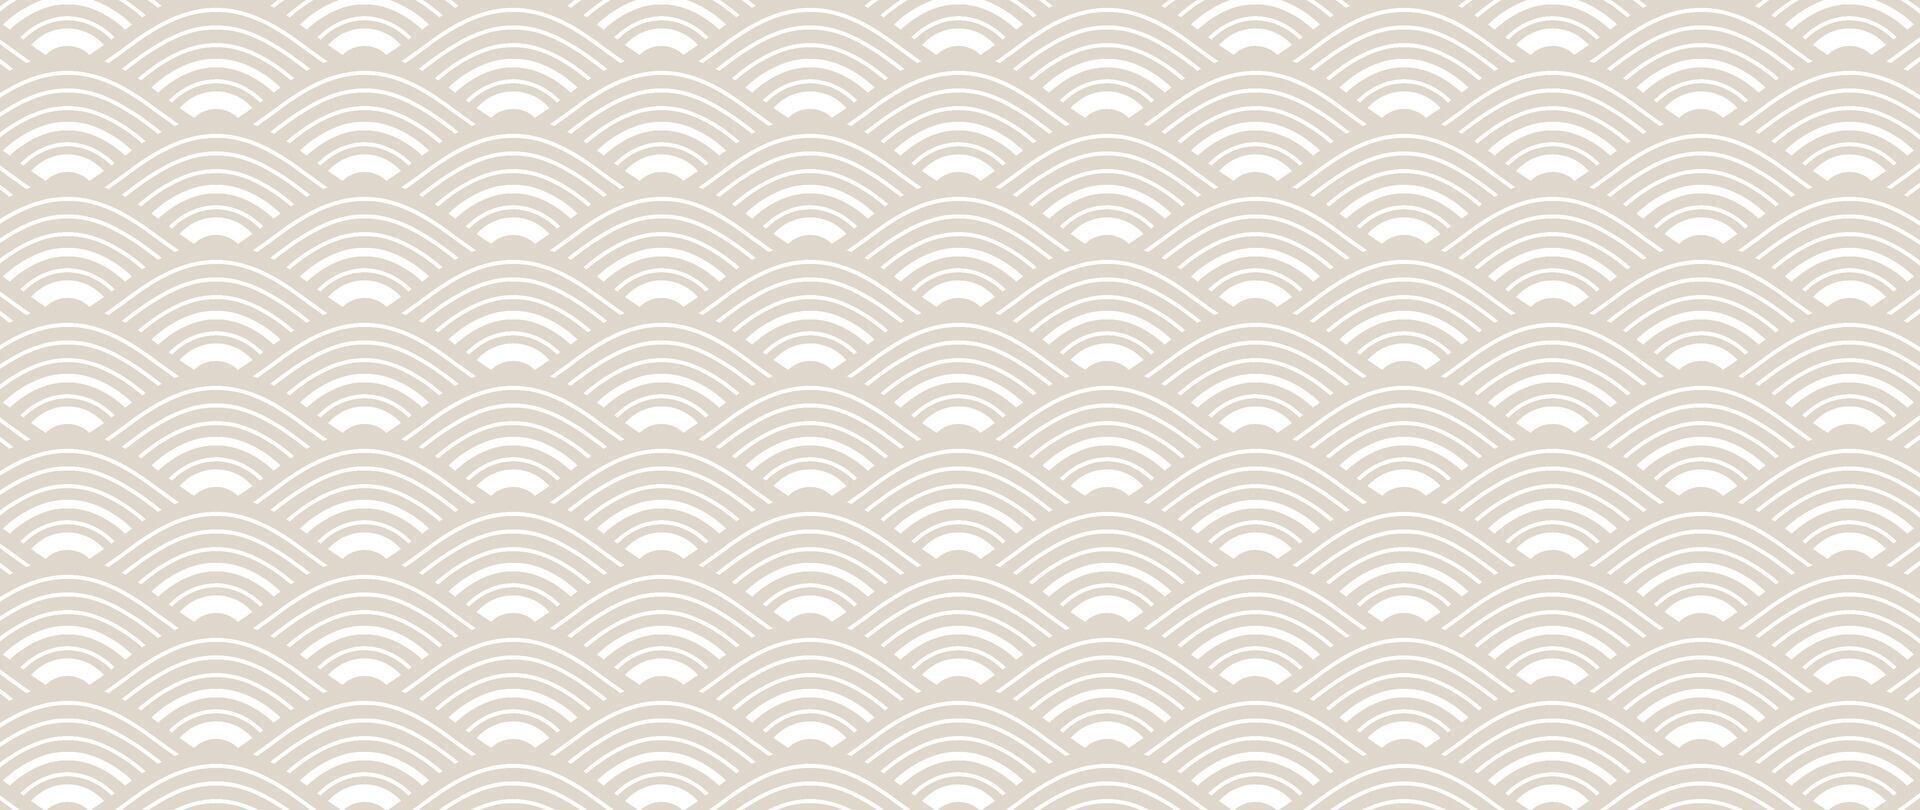 Japanese beige wave background vector. Wallpaper design with beige and white ocean wave pattern backdrop. Modern luxury oriental illustration for cover, banner, website, decor, border. vector